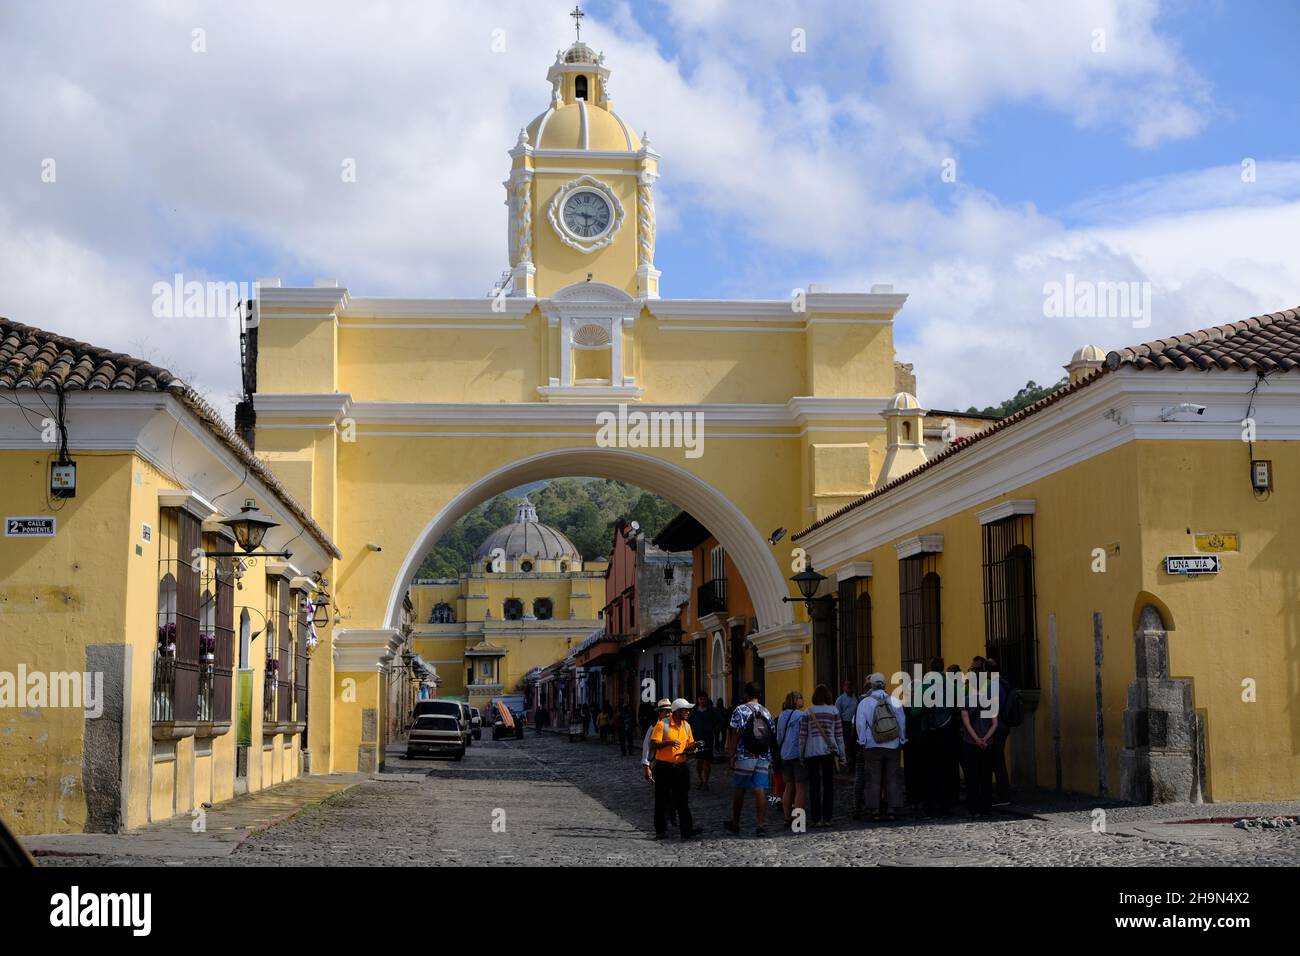 Guatemala Antigua Guatemala - Santa Catalina Arch - El Arco de Santa Catalina Stockfoto